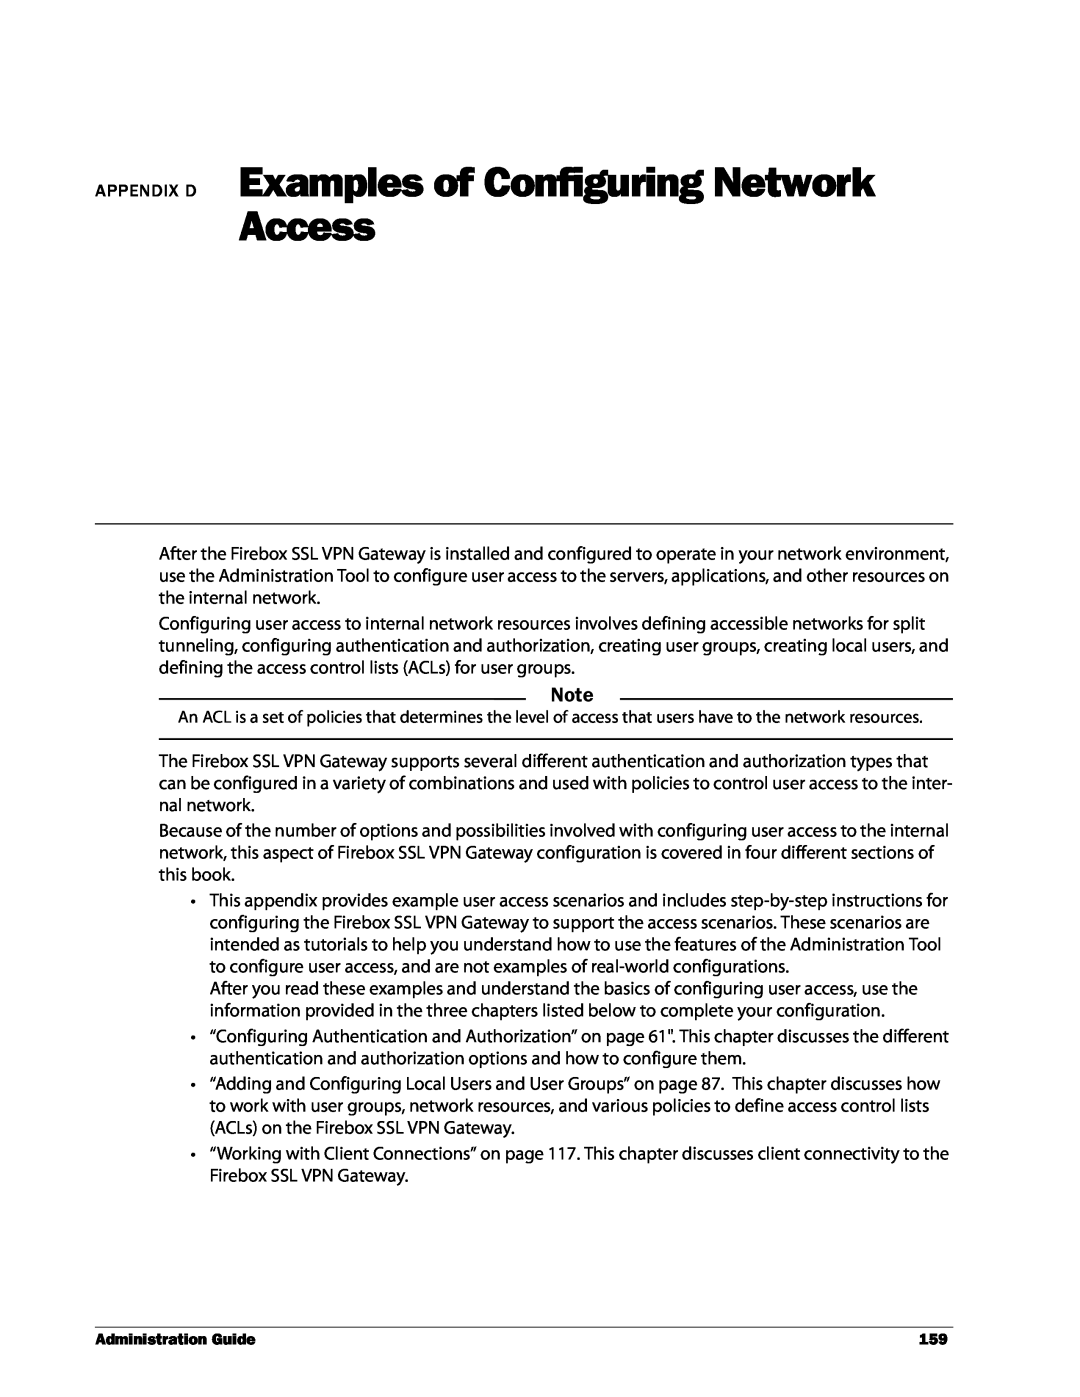 WatchGuard Technologies SSL VPN manual APPENDIX D Examples of Configuring Network Access, Administration Guide 